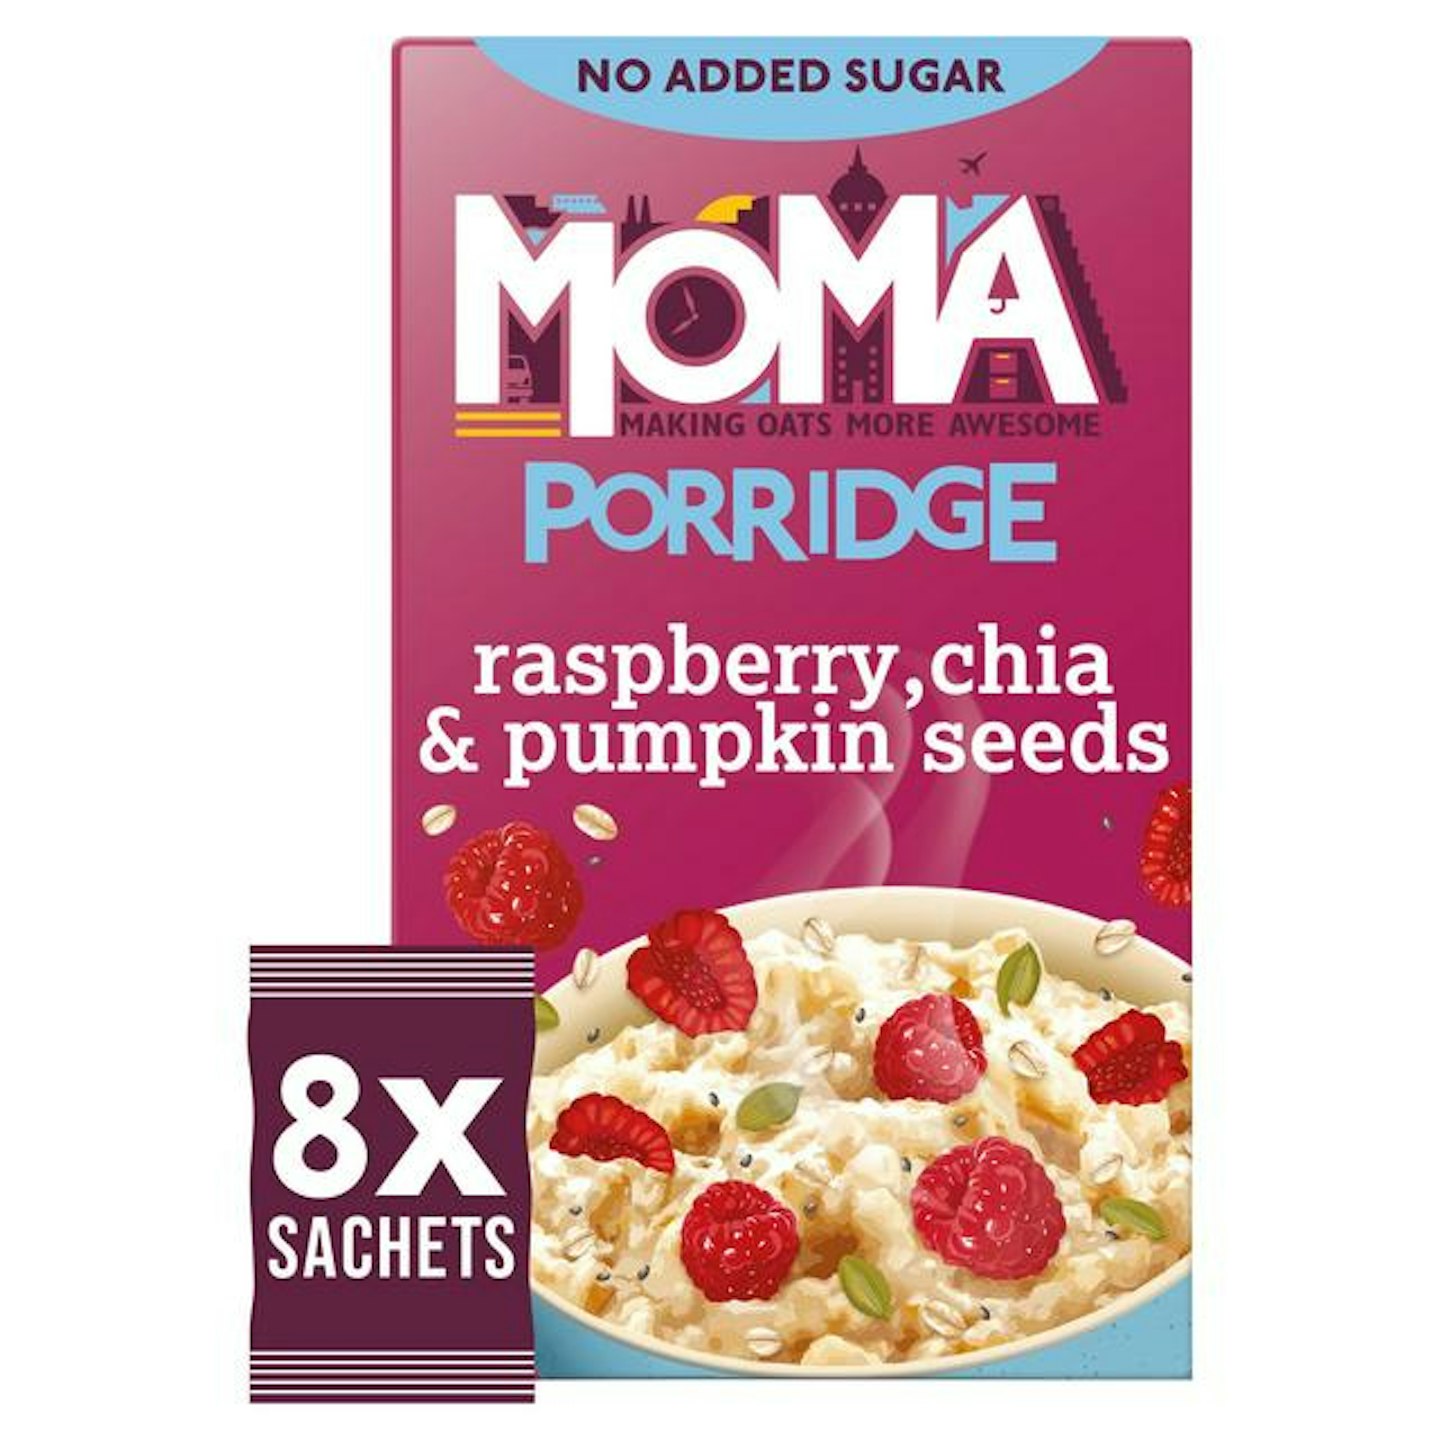 Moma Porridge Raspberry, Chia & Pumpkin Seeds Sachets